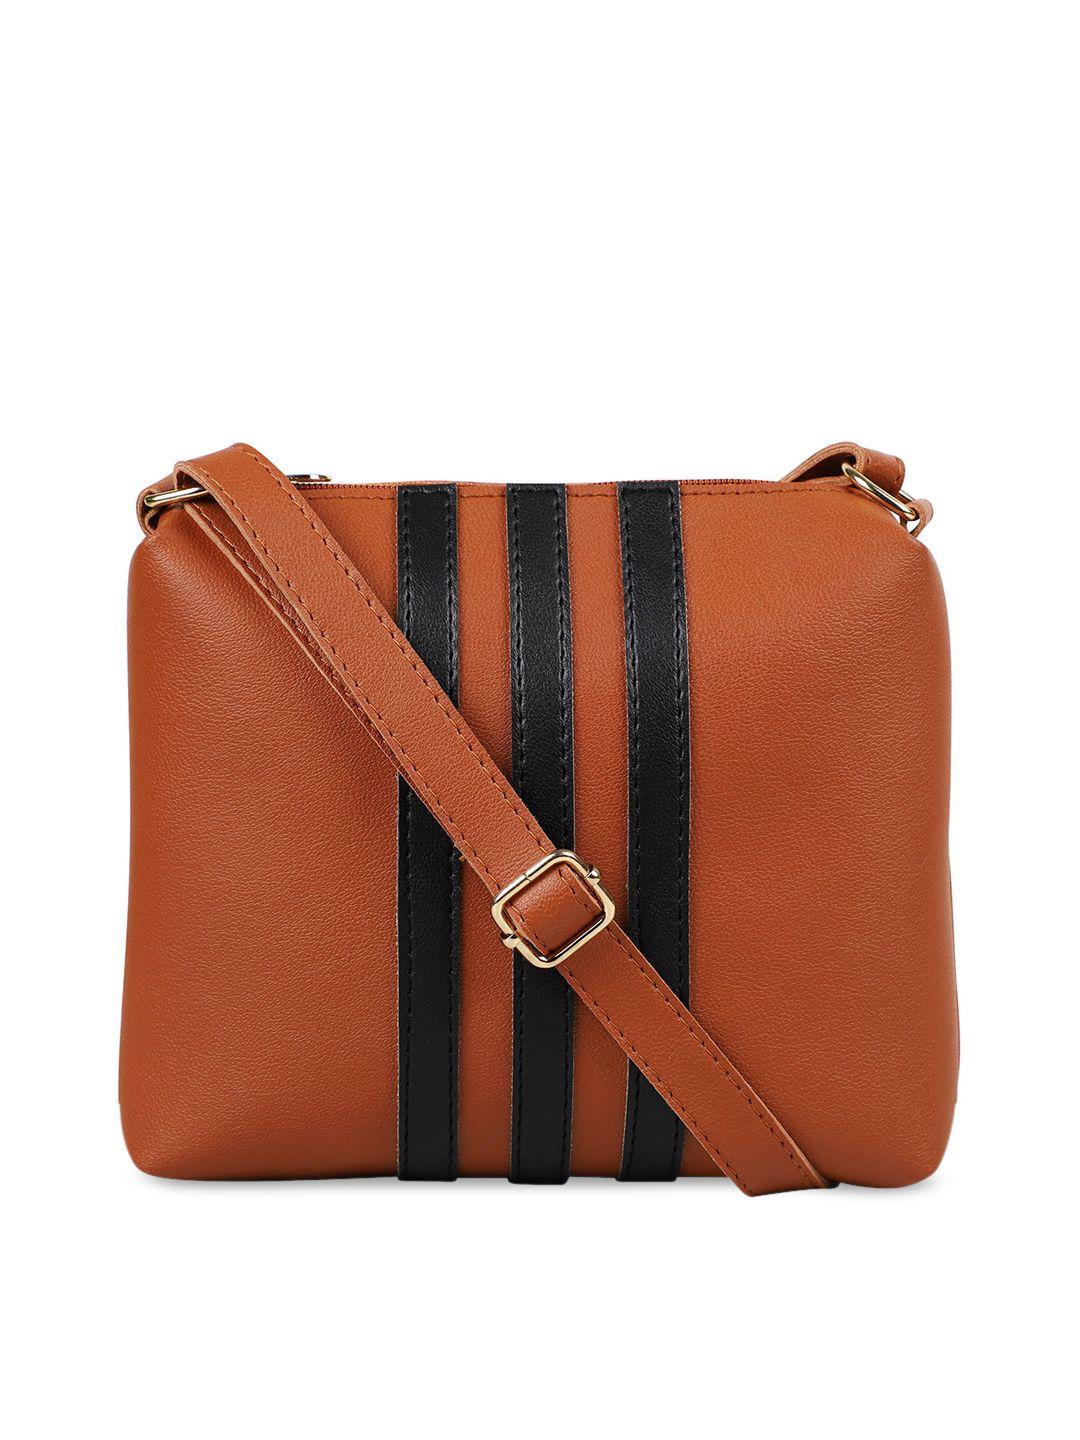 bagsy malone rust brown & black striped sling bag